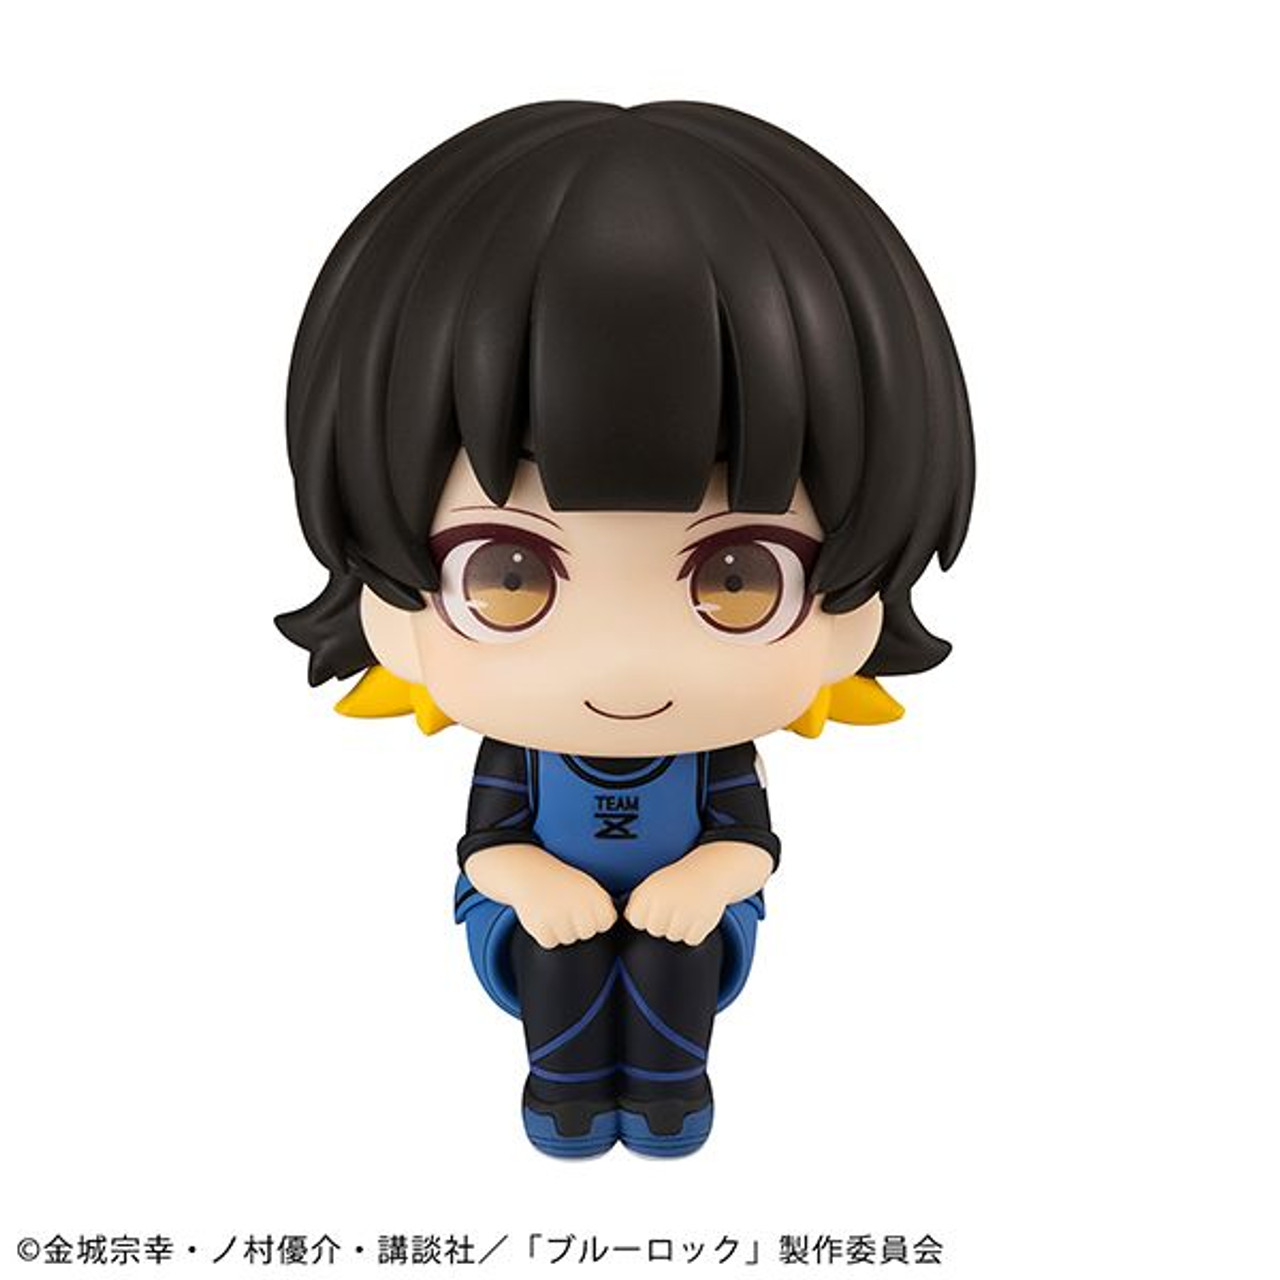 Blue Lock Acrylic Panel Meguru Bachira (Anime Toy) Hi-Res image list